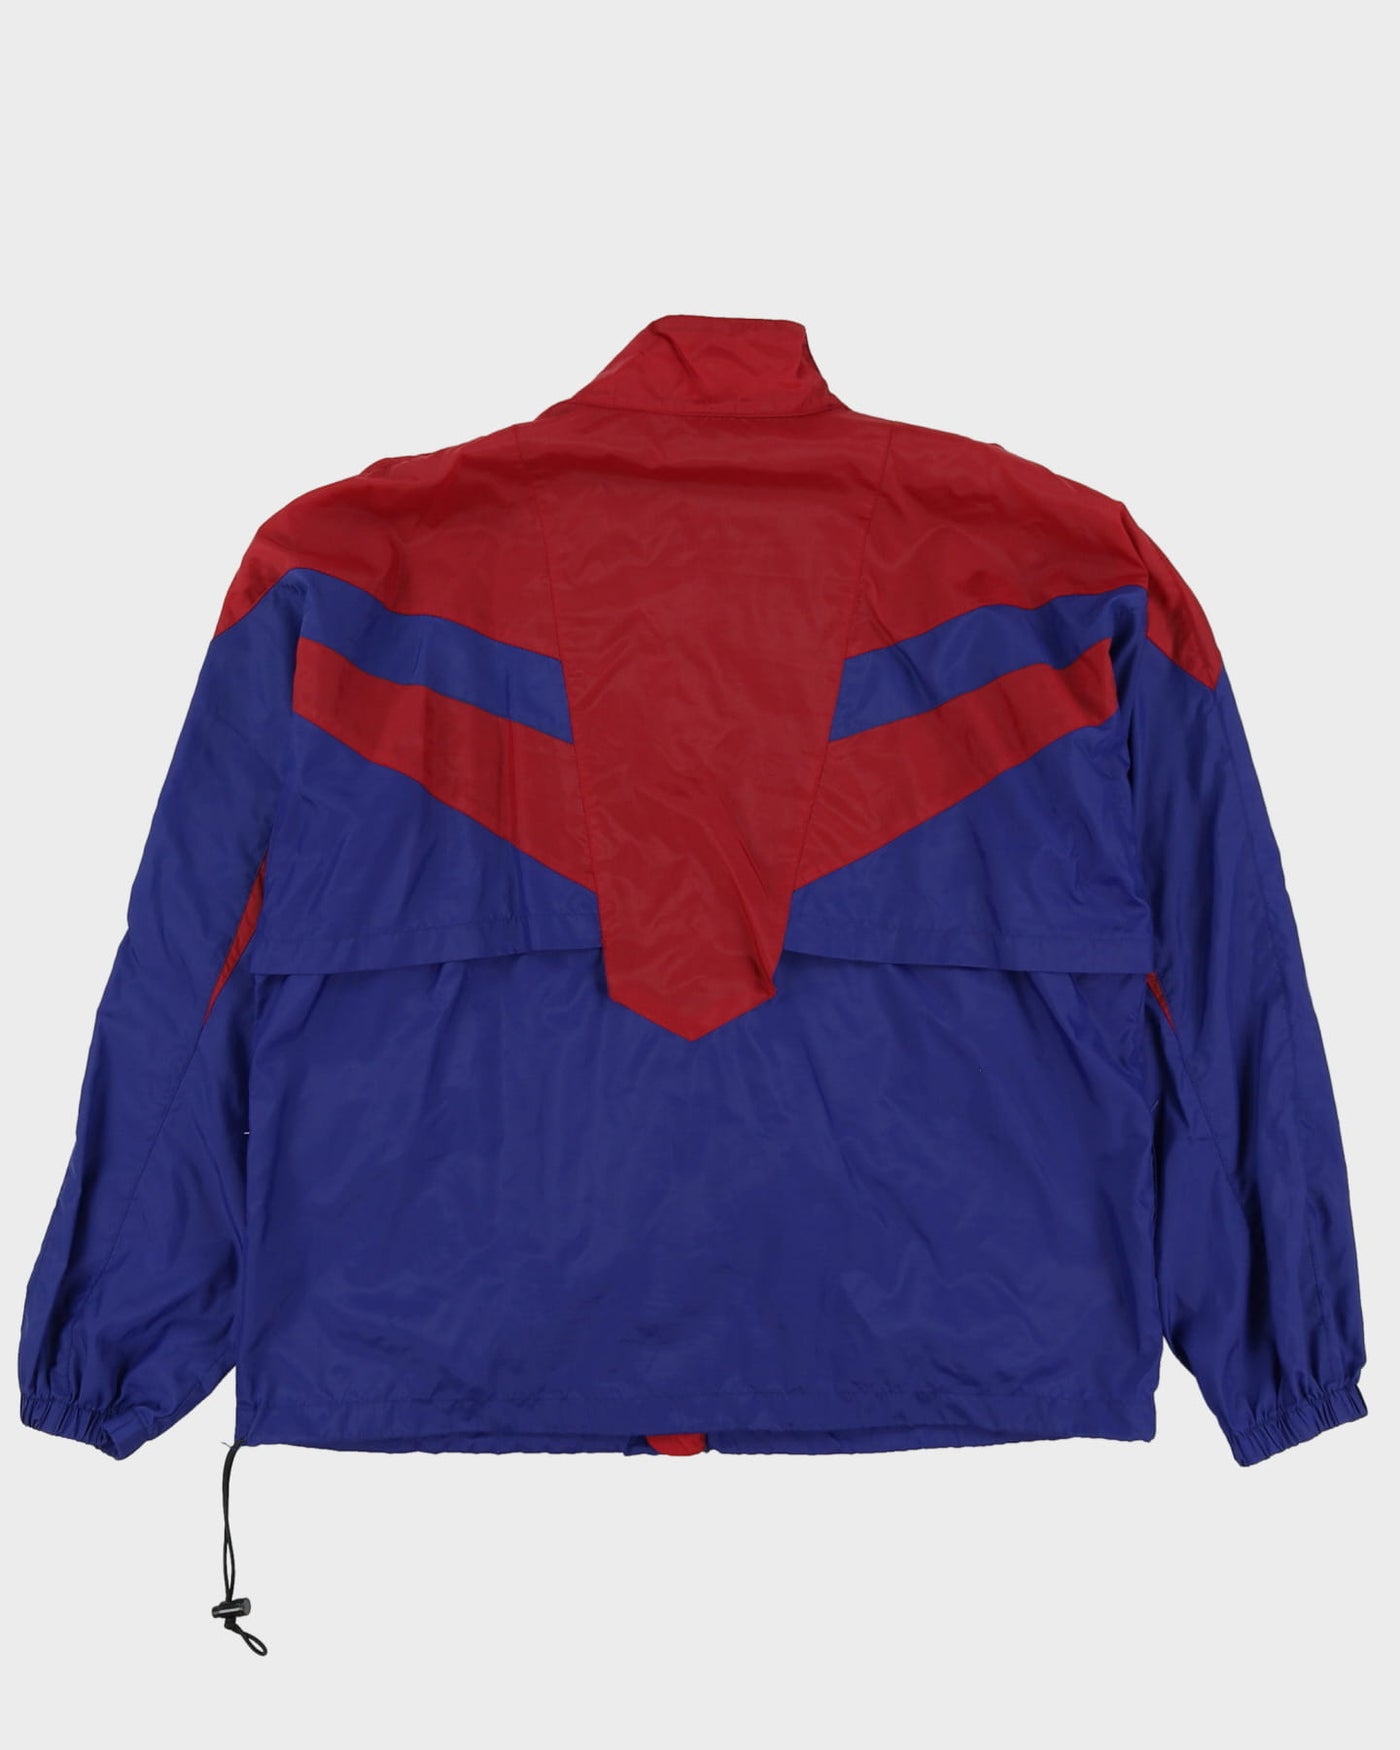 Vintage Asics Blue / Red Windbreaker Jacket - XL